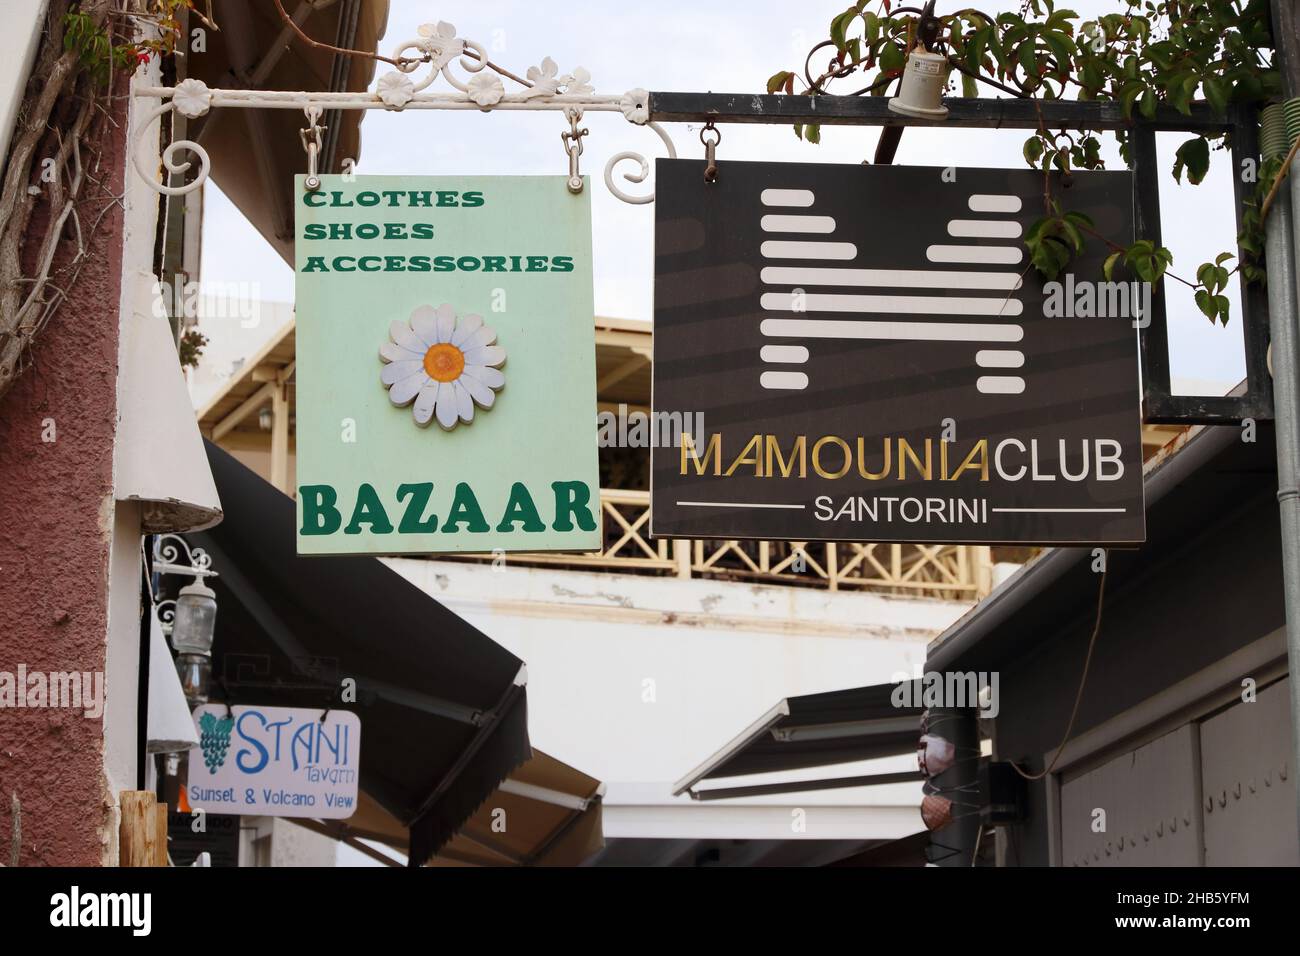 Signs for shops and clubs overhang narrow street, Fira, Santorini, Greece Stock Photo